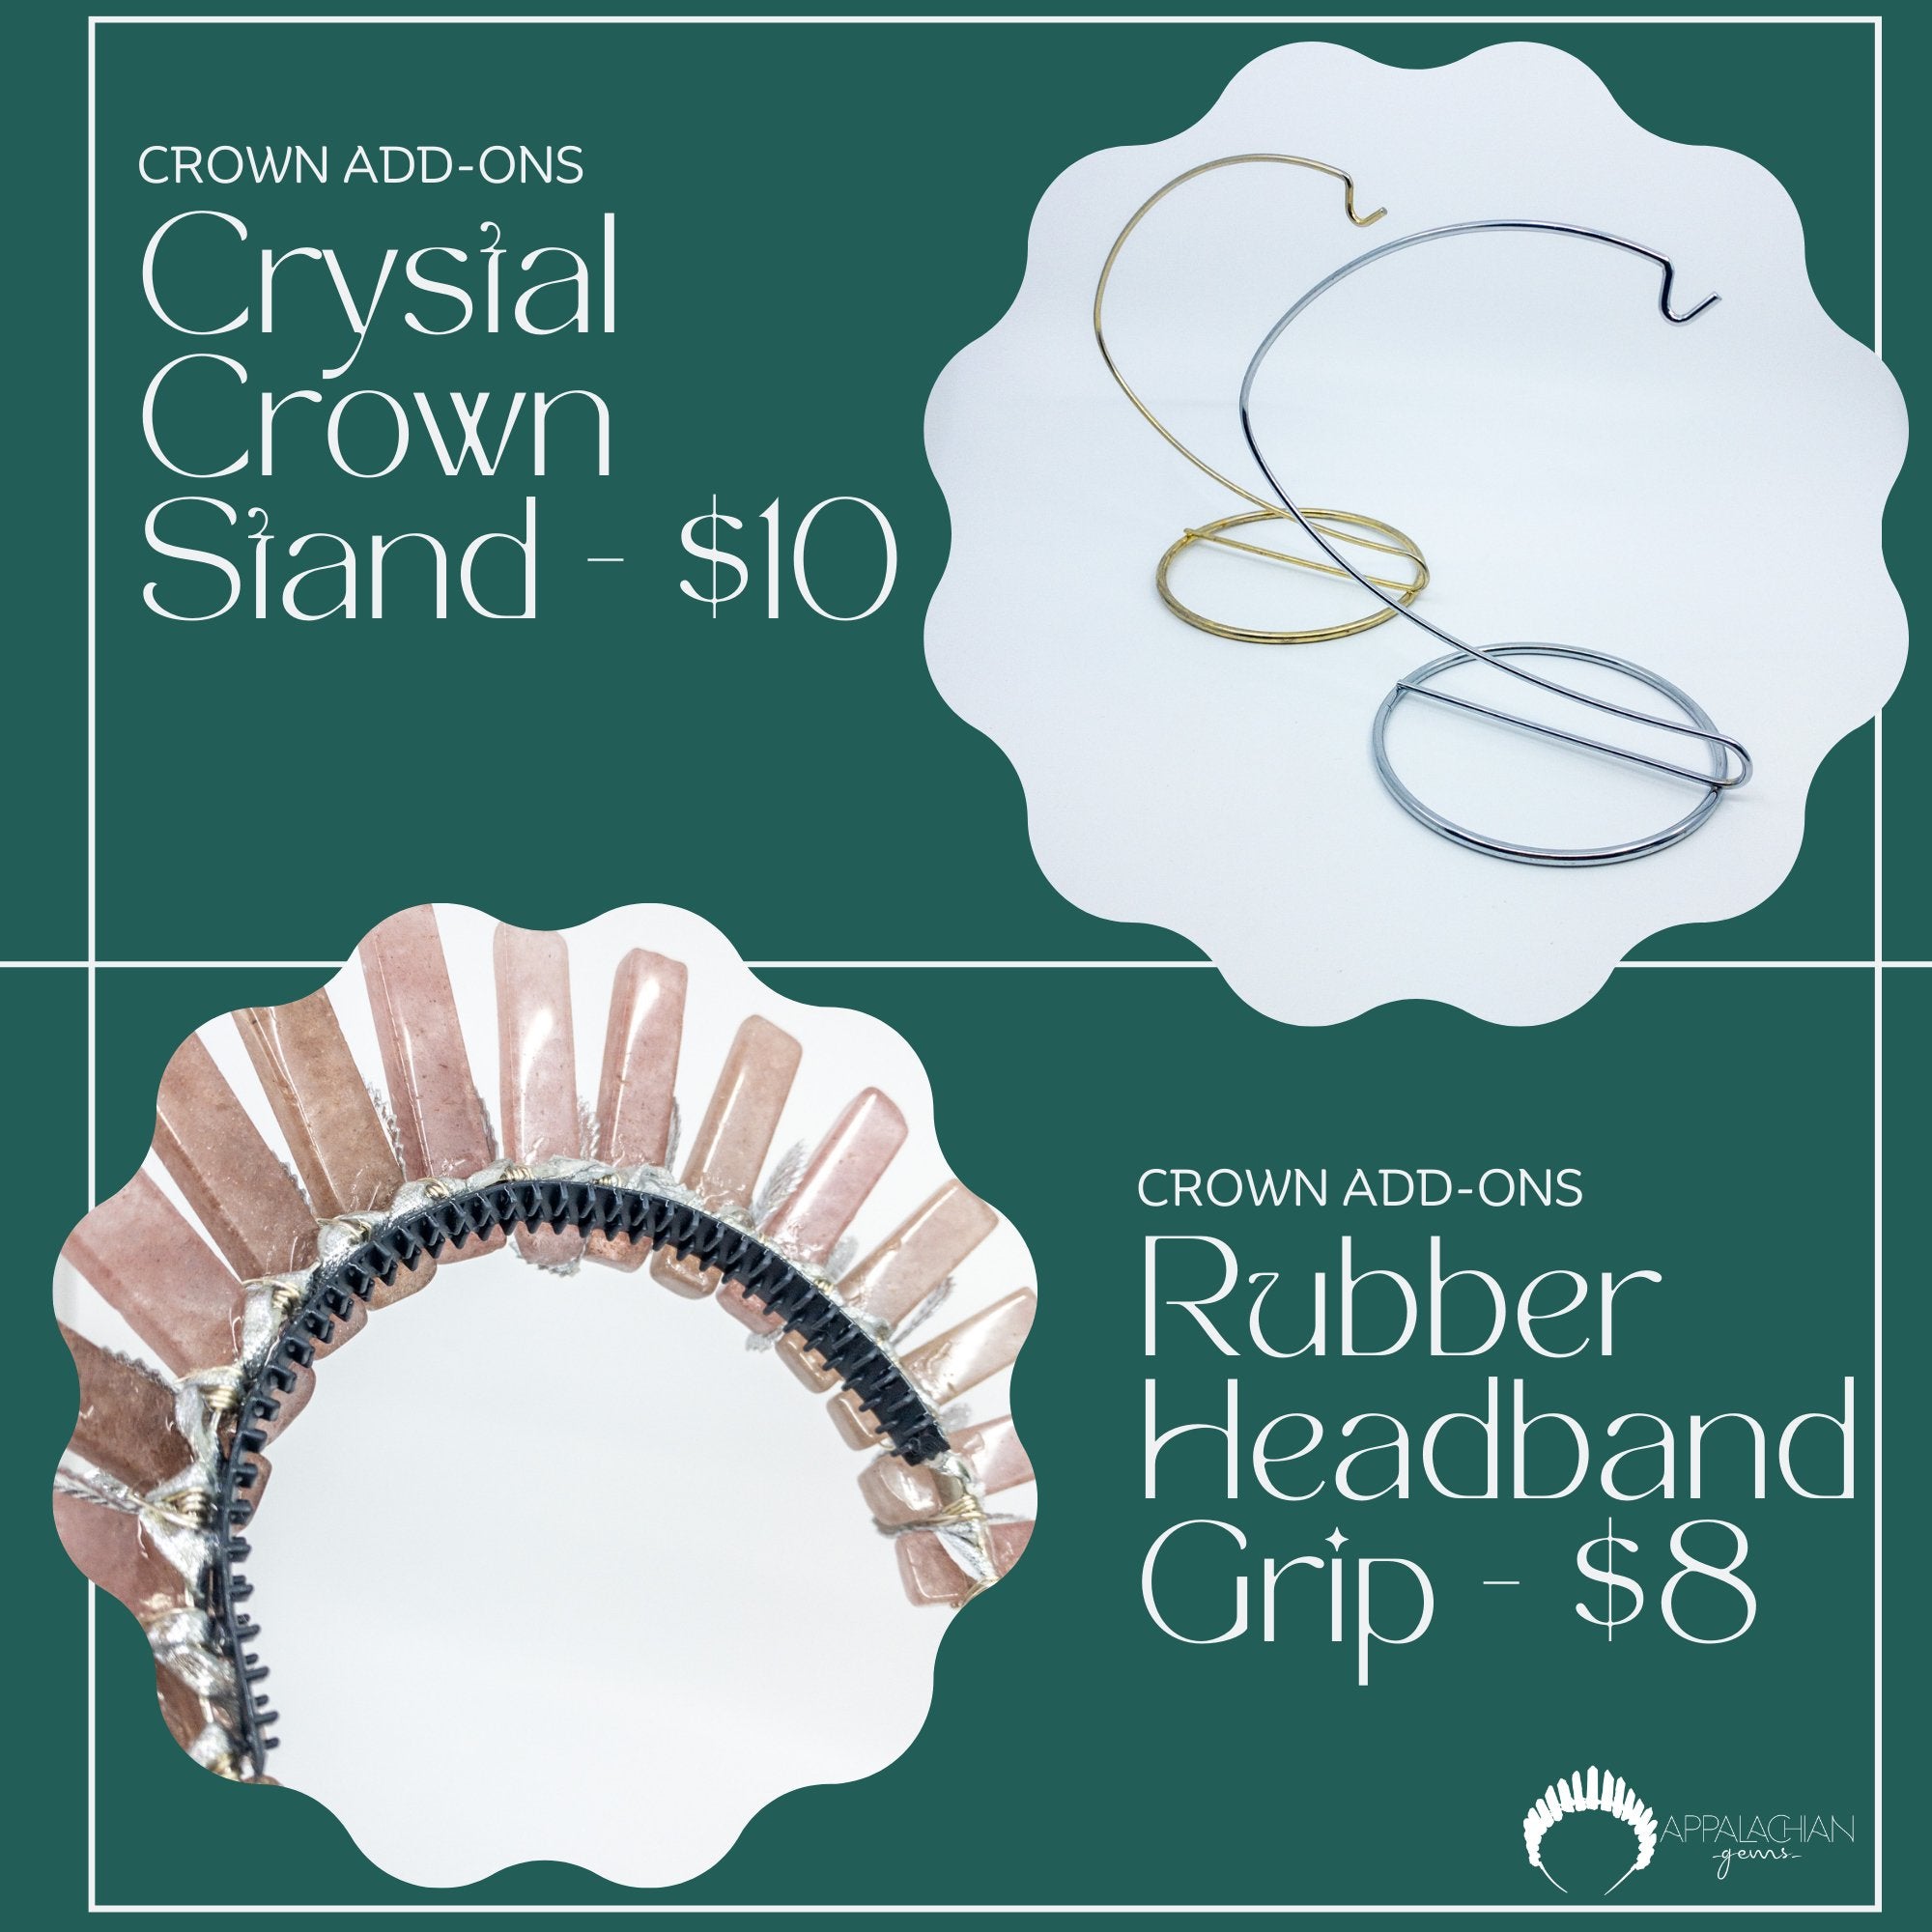 Clear Quartz Goddess Crown - Appalachian Gems